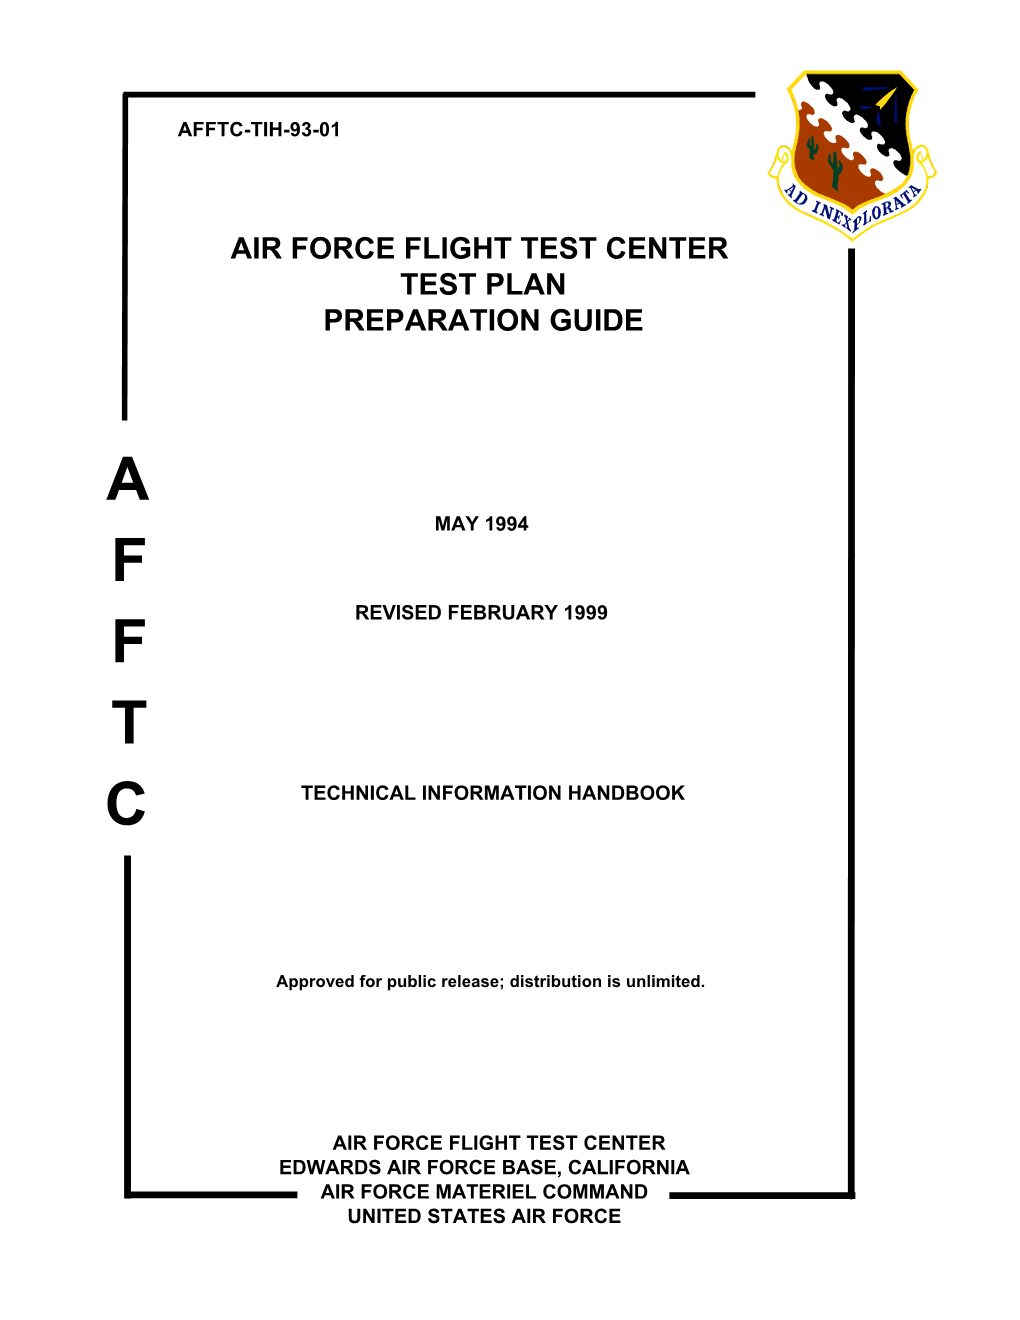 AFFTC Test Plan Guide.Pdf (New Window)